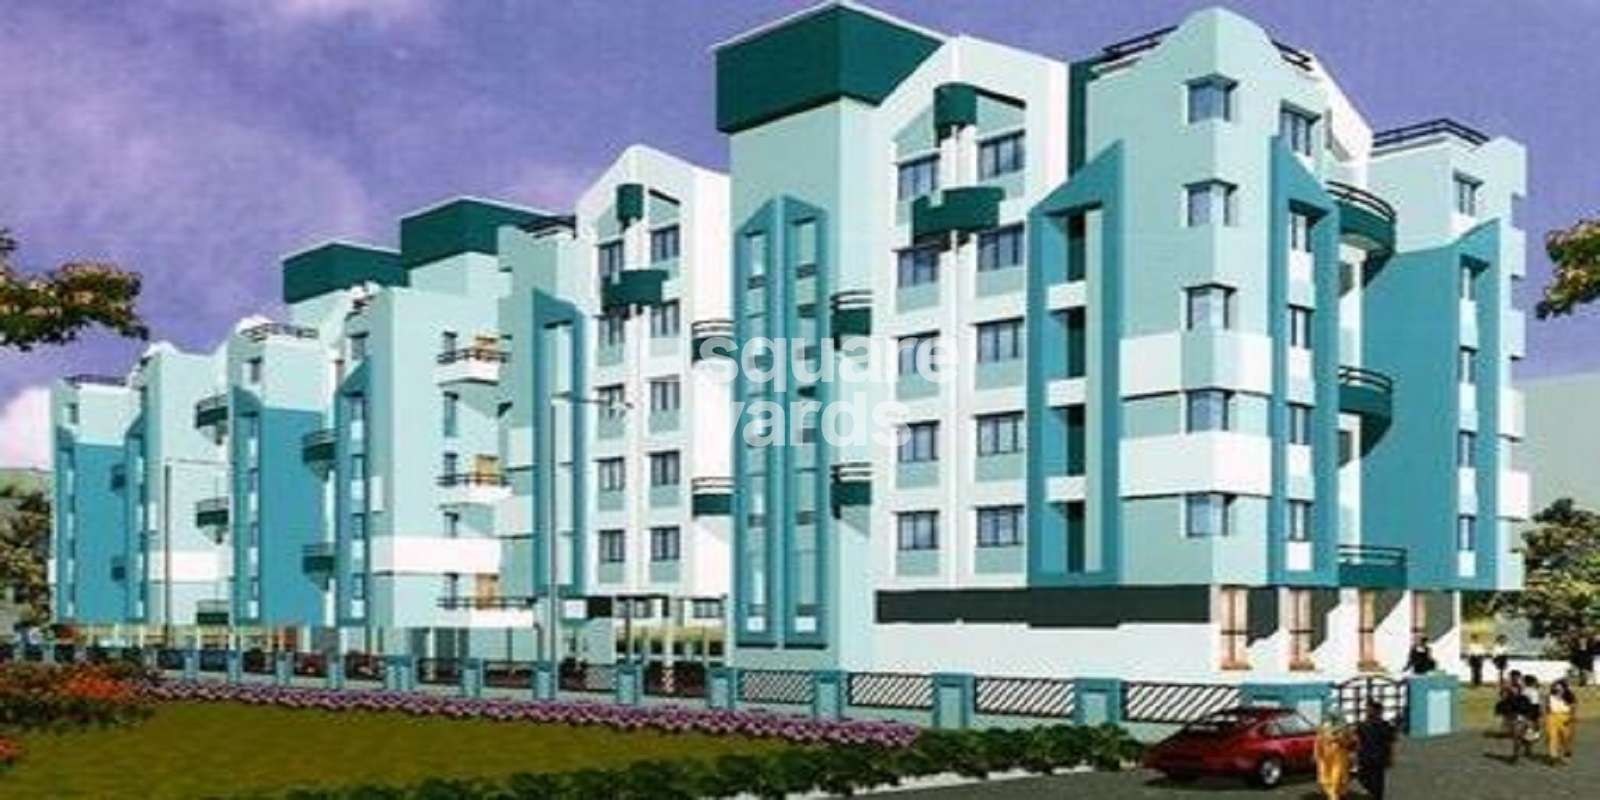 Ganesh Vihar Apartments Cover Image